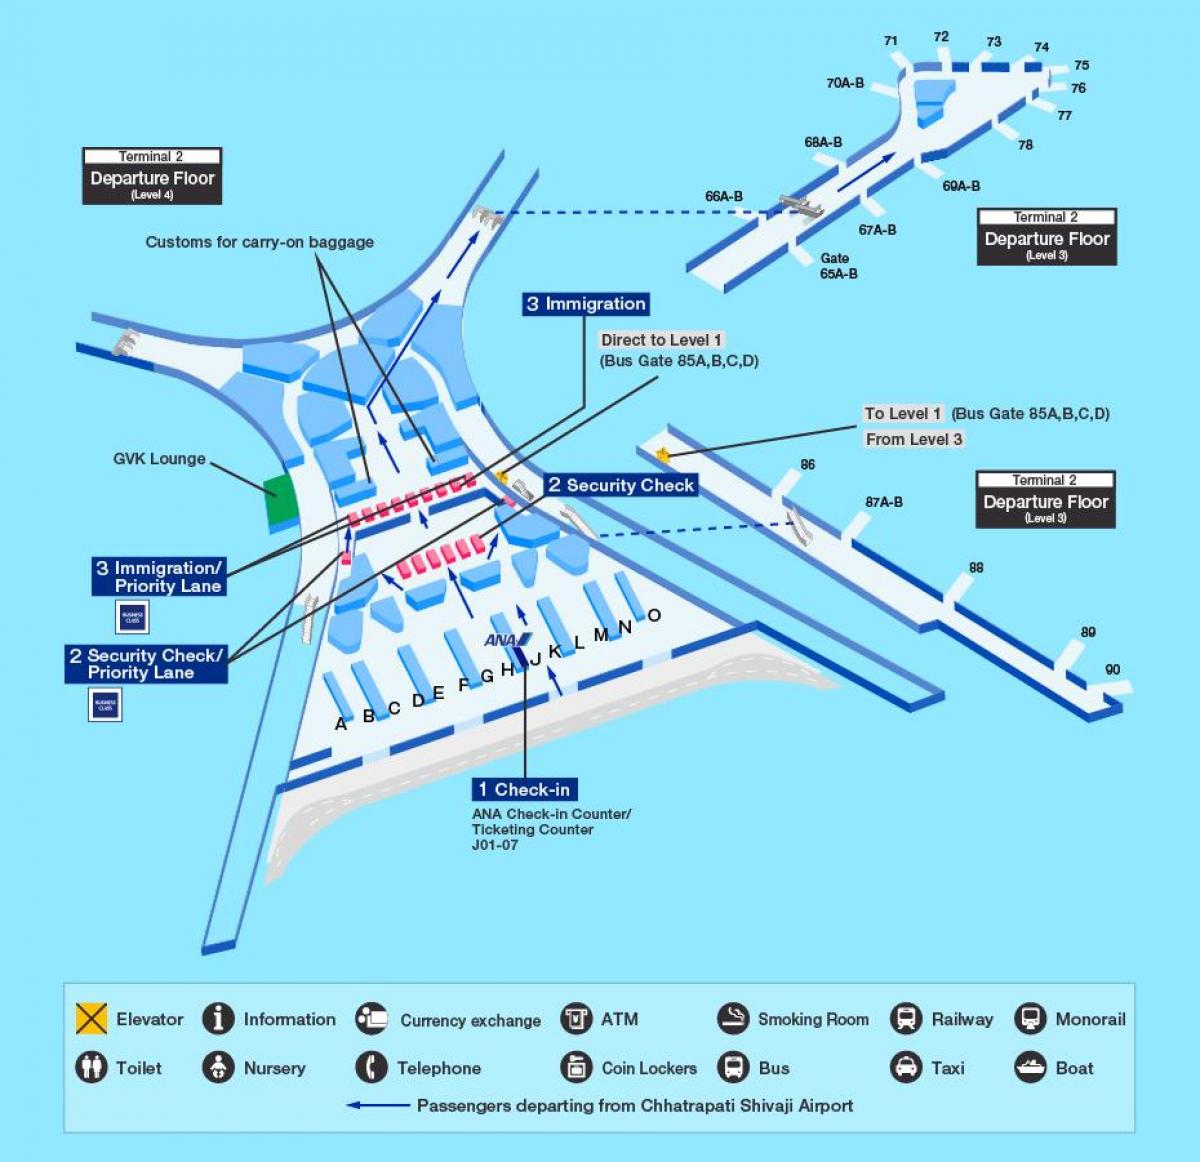 Mumbai international airport terminal 2 kart